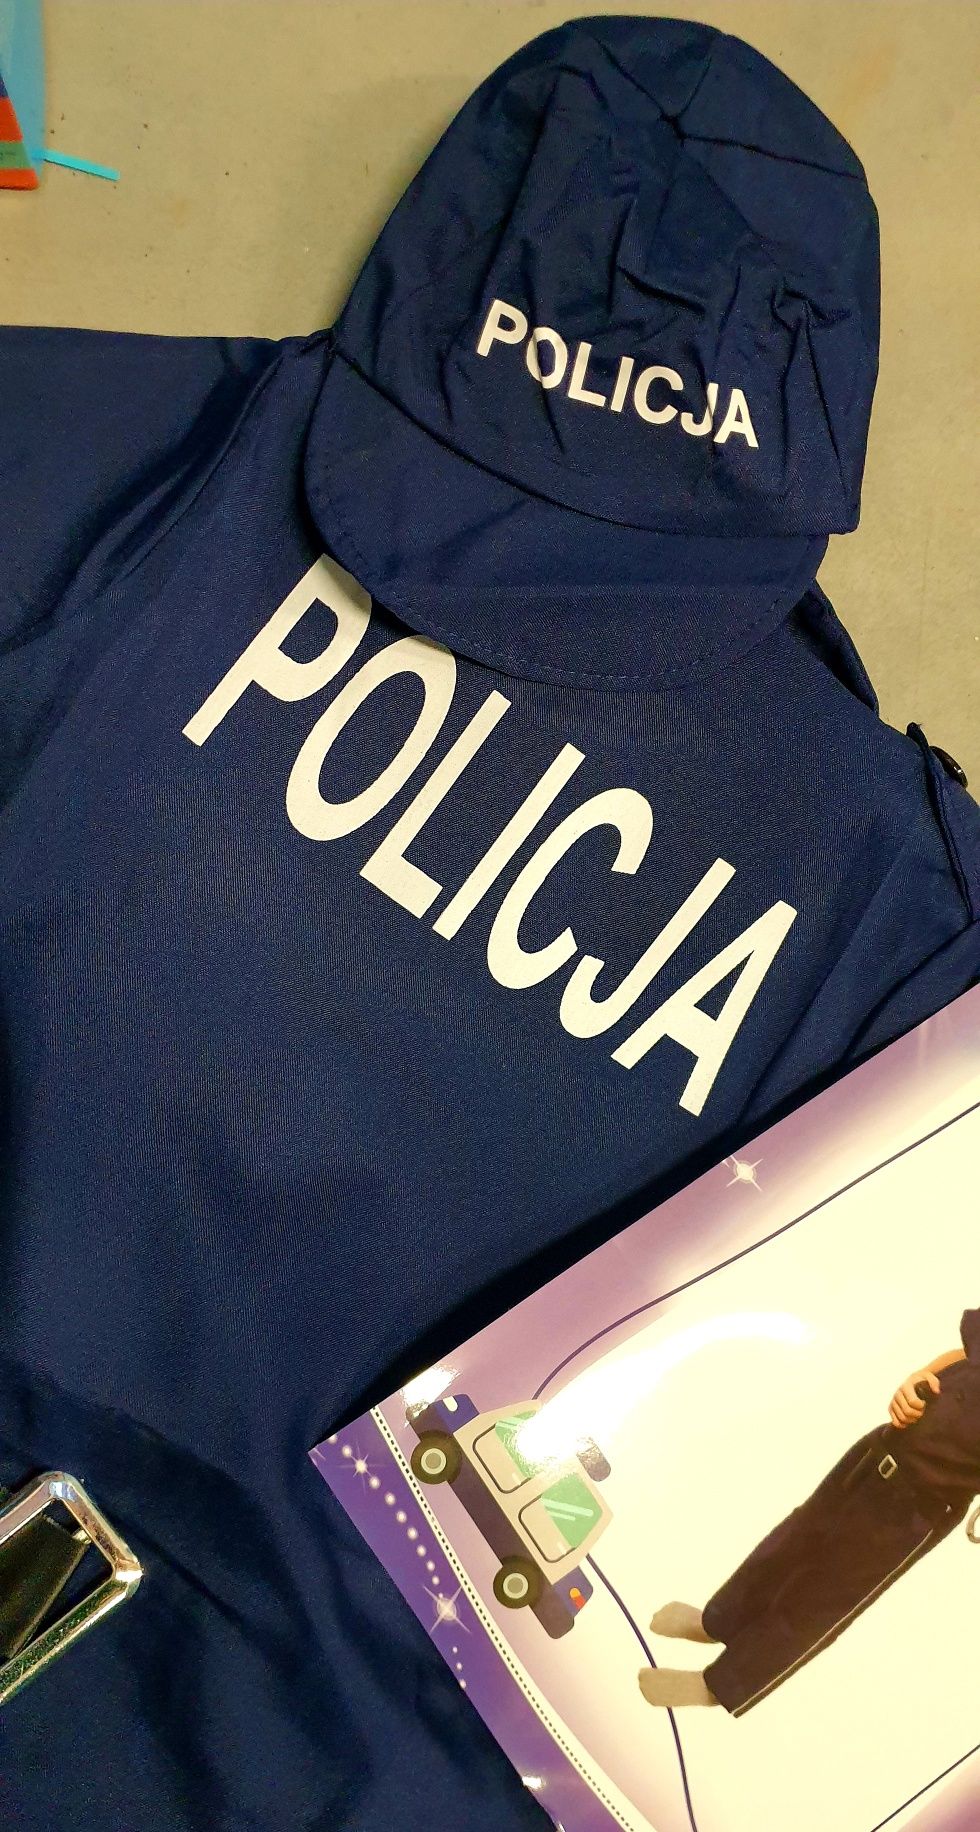 S 104-110 przebranie kostium Policja strój Policjanta